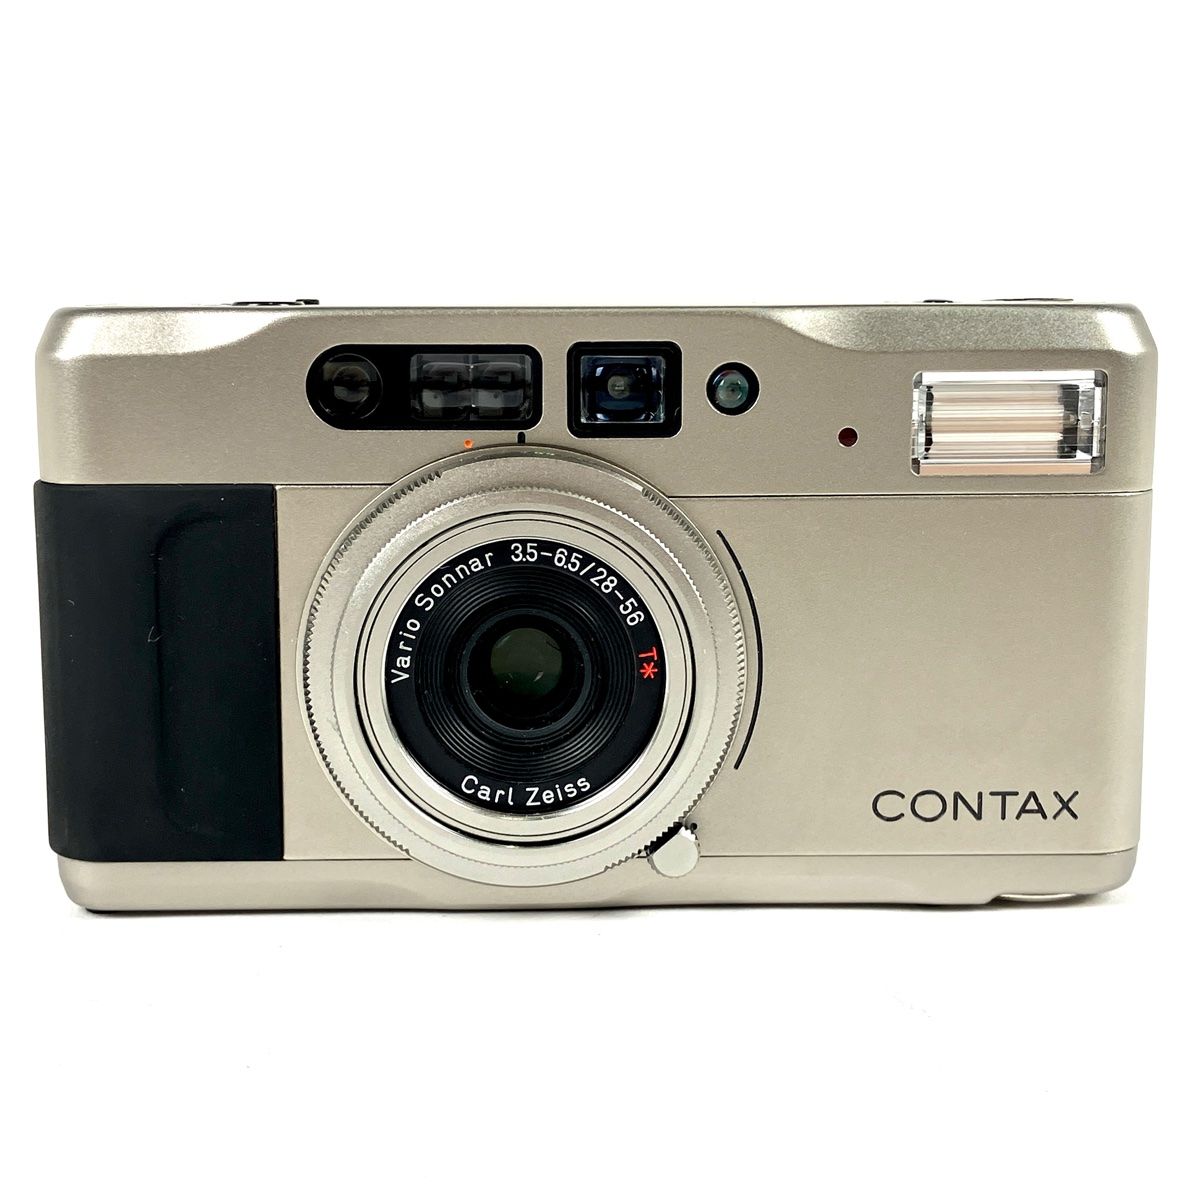 CONTAX Tvsコンパクトフィルムカメラ cm55 - www.stedile.com.br